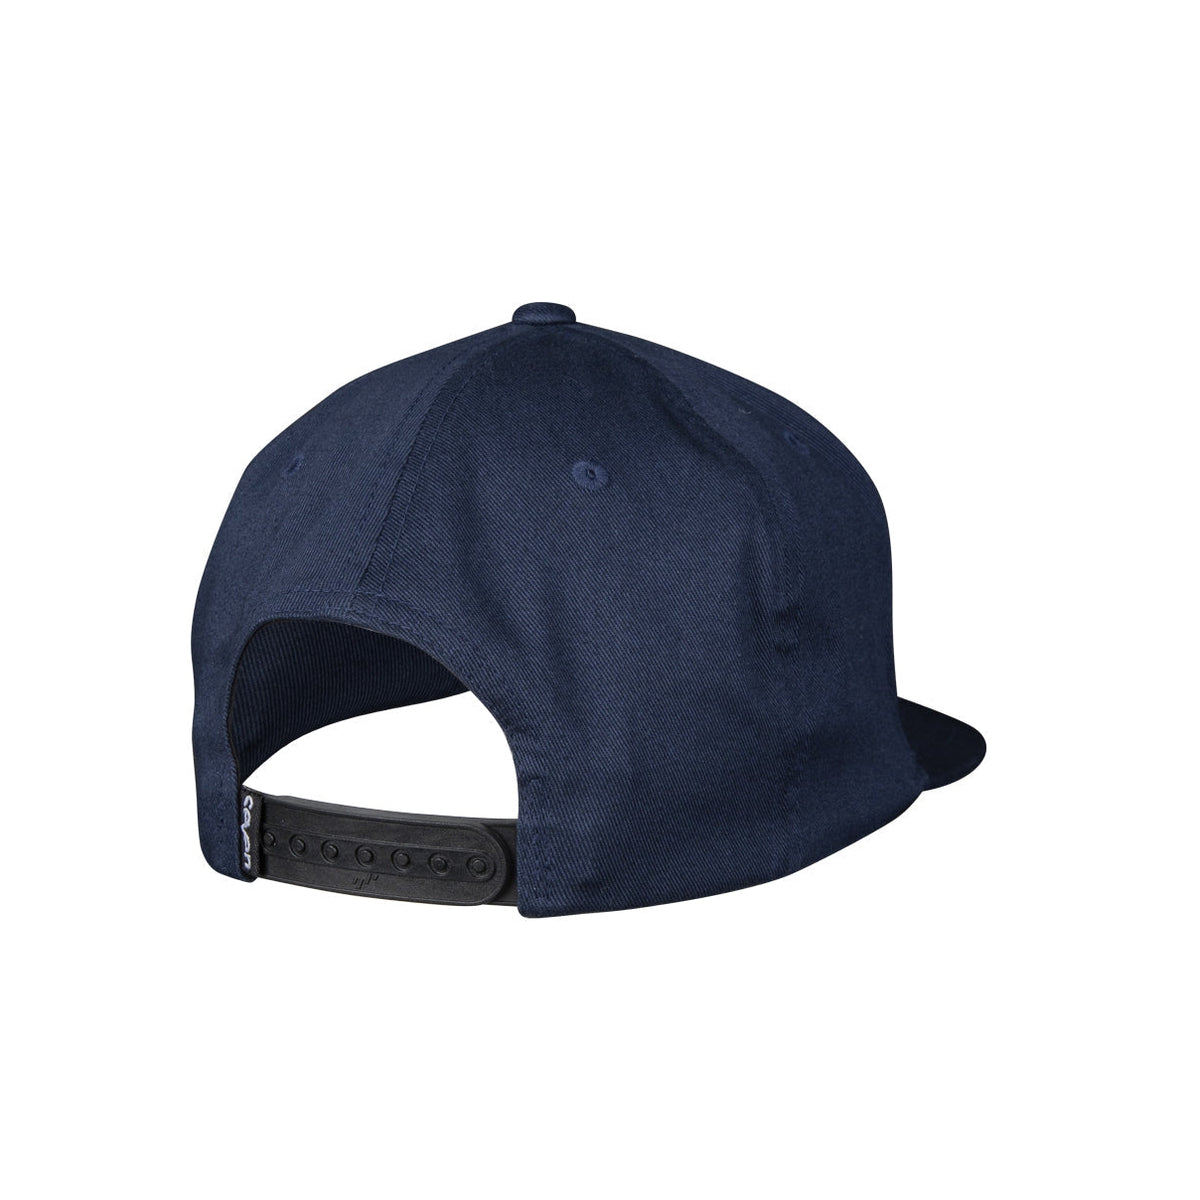 Seven Brand Flex Hat